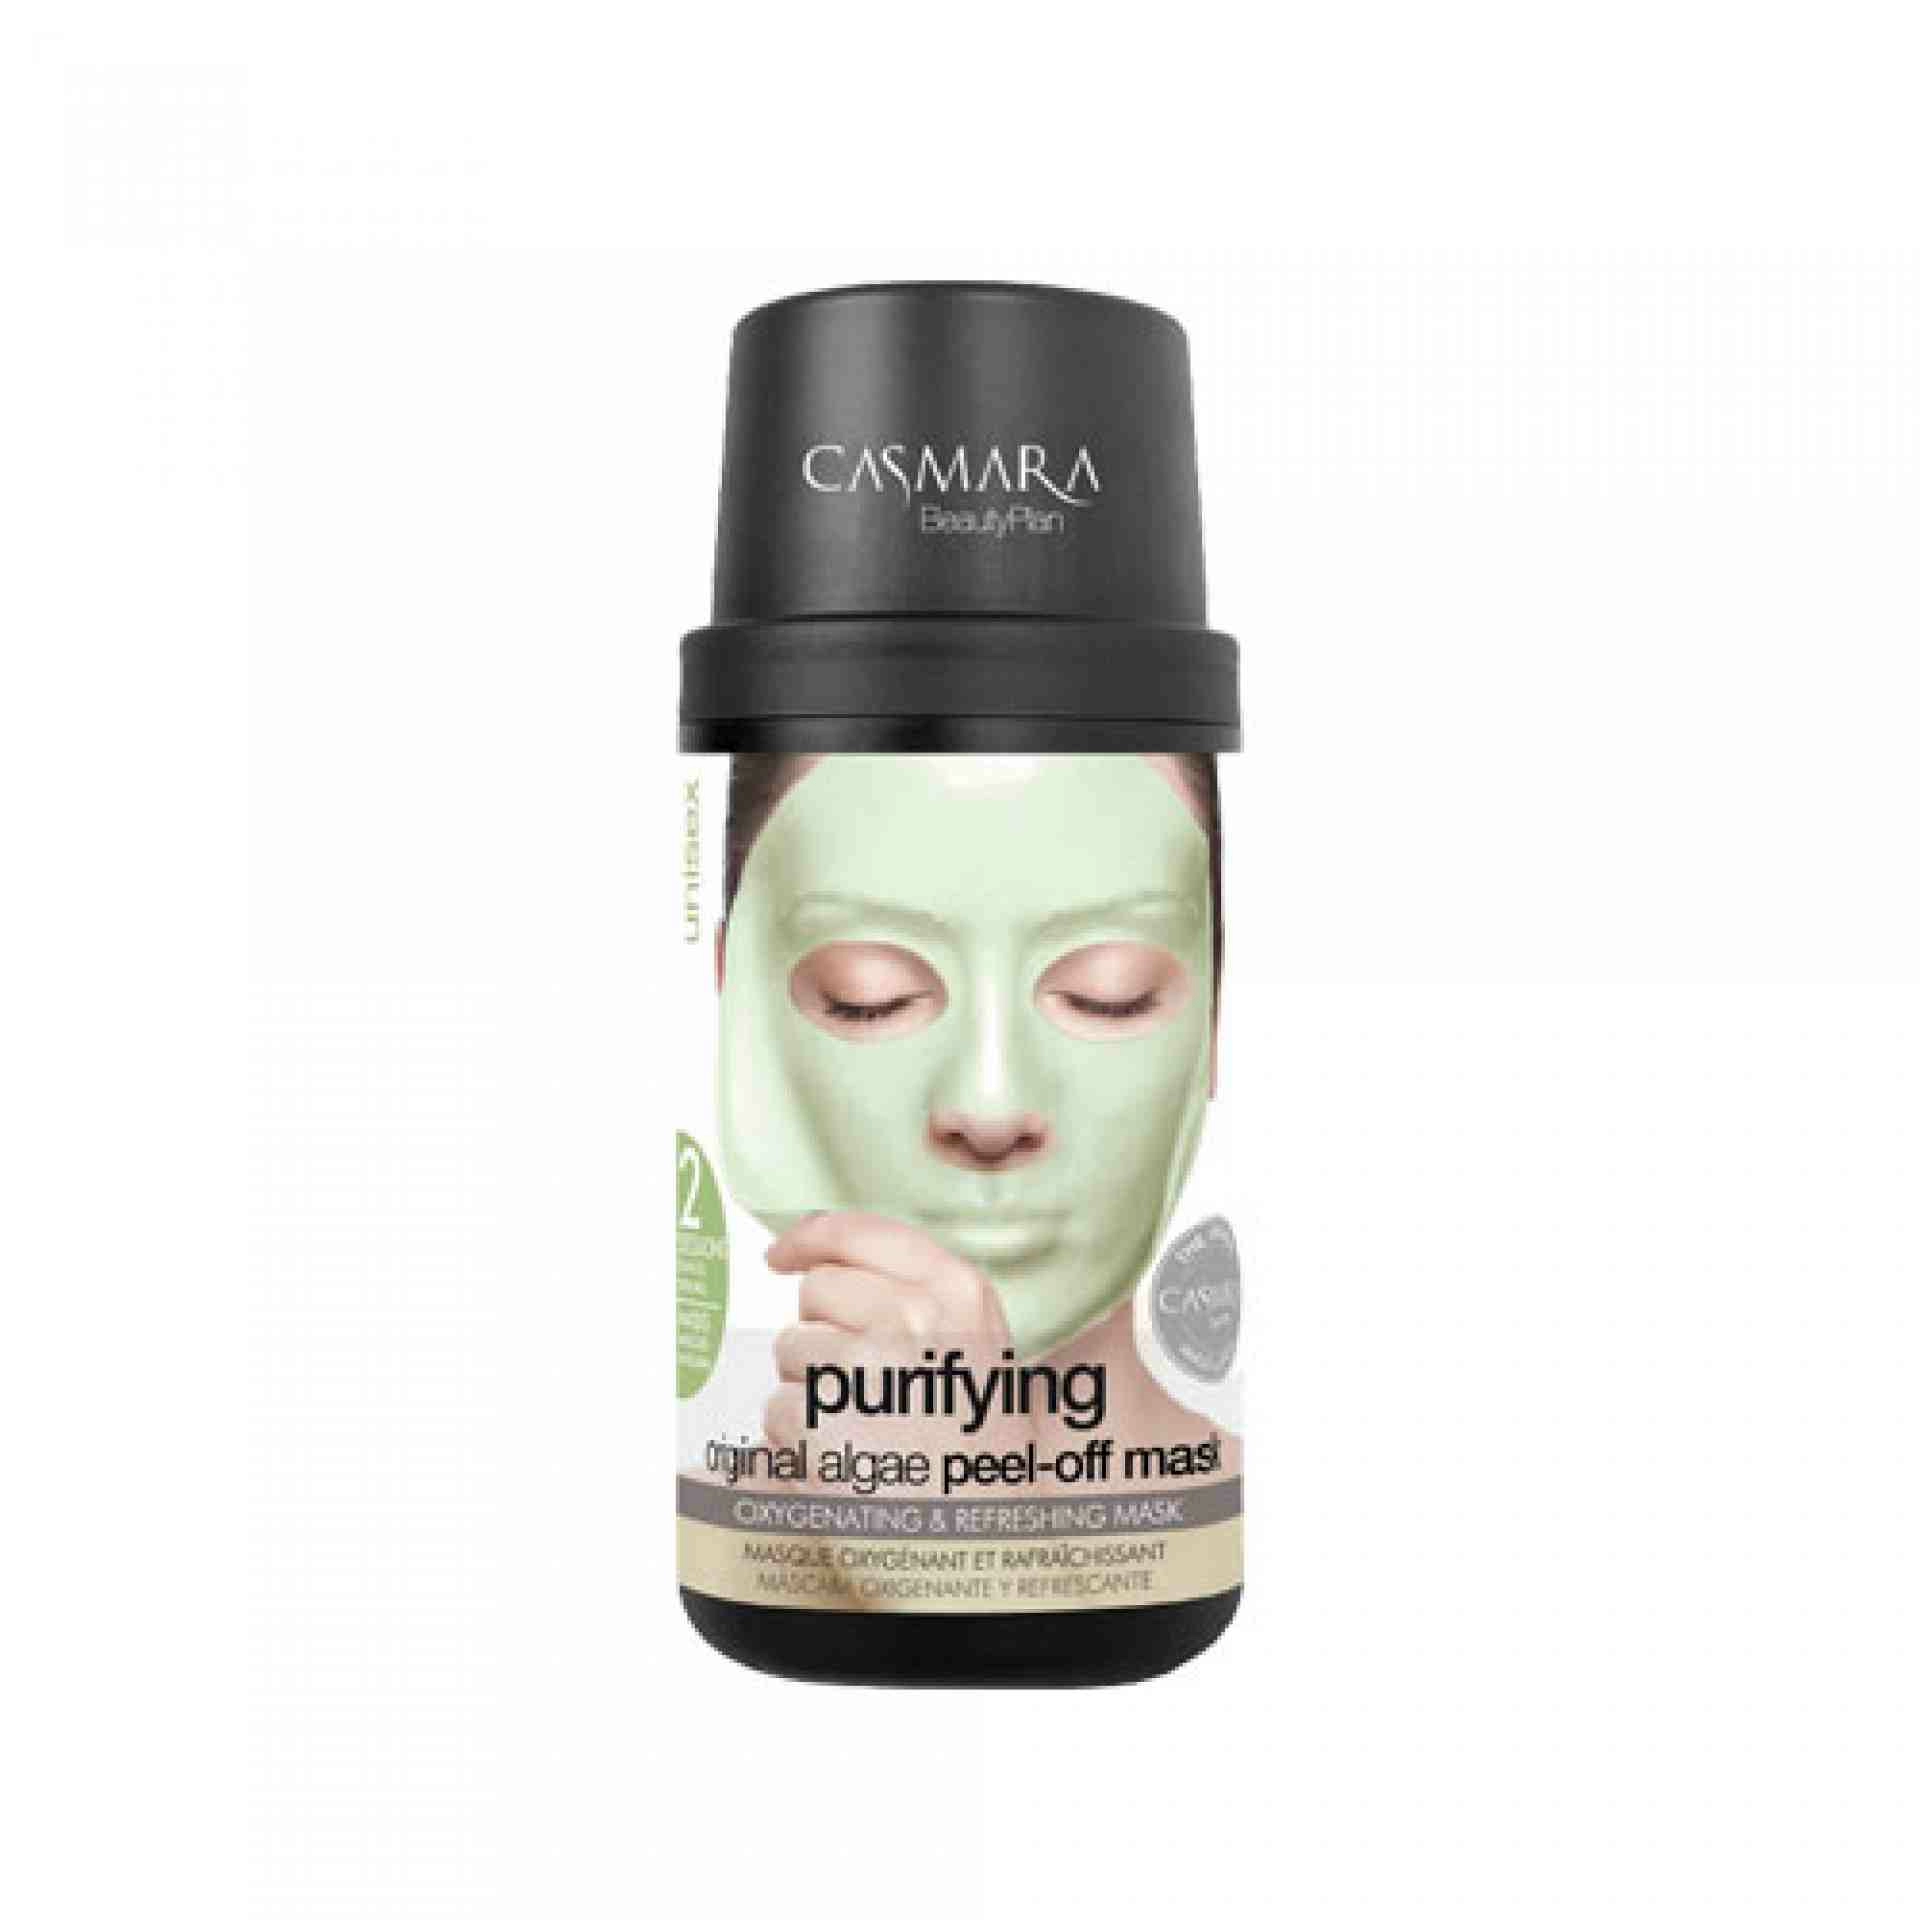 Purifying Algae Peel - Off Mask 1 unidad | Mascarilla Purificante - Casmara ®